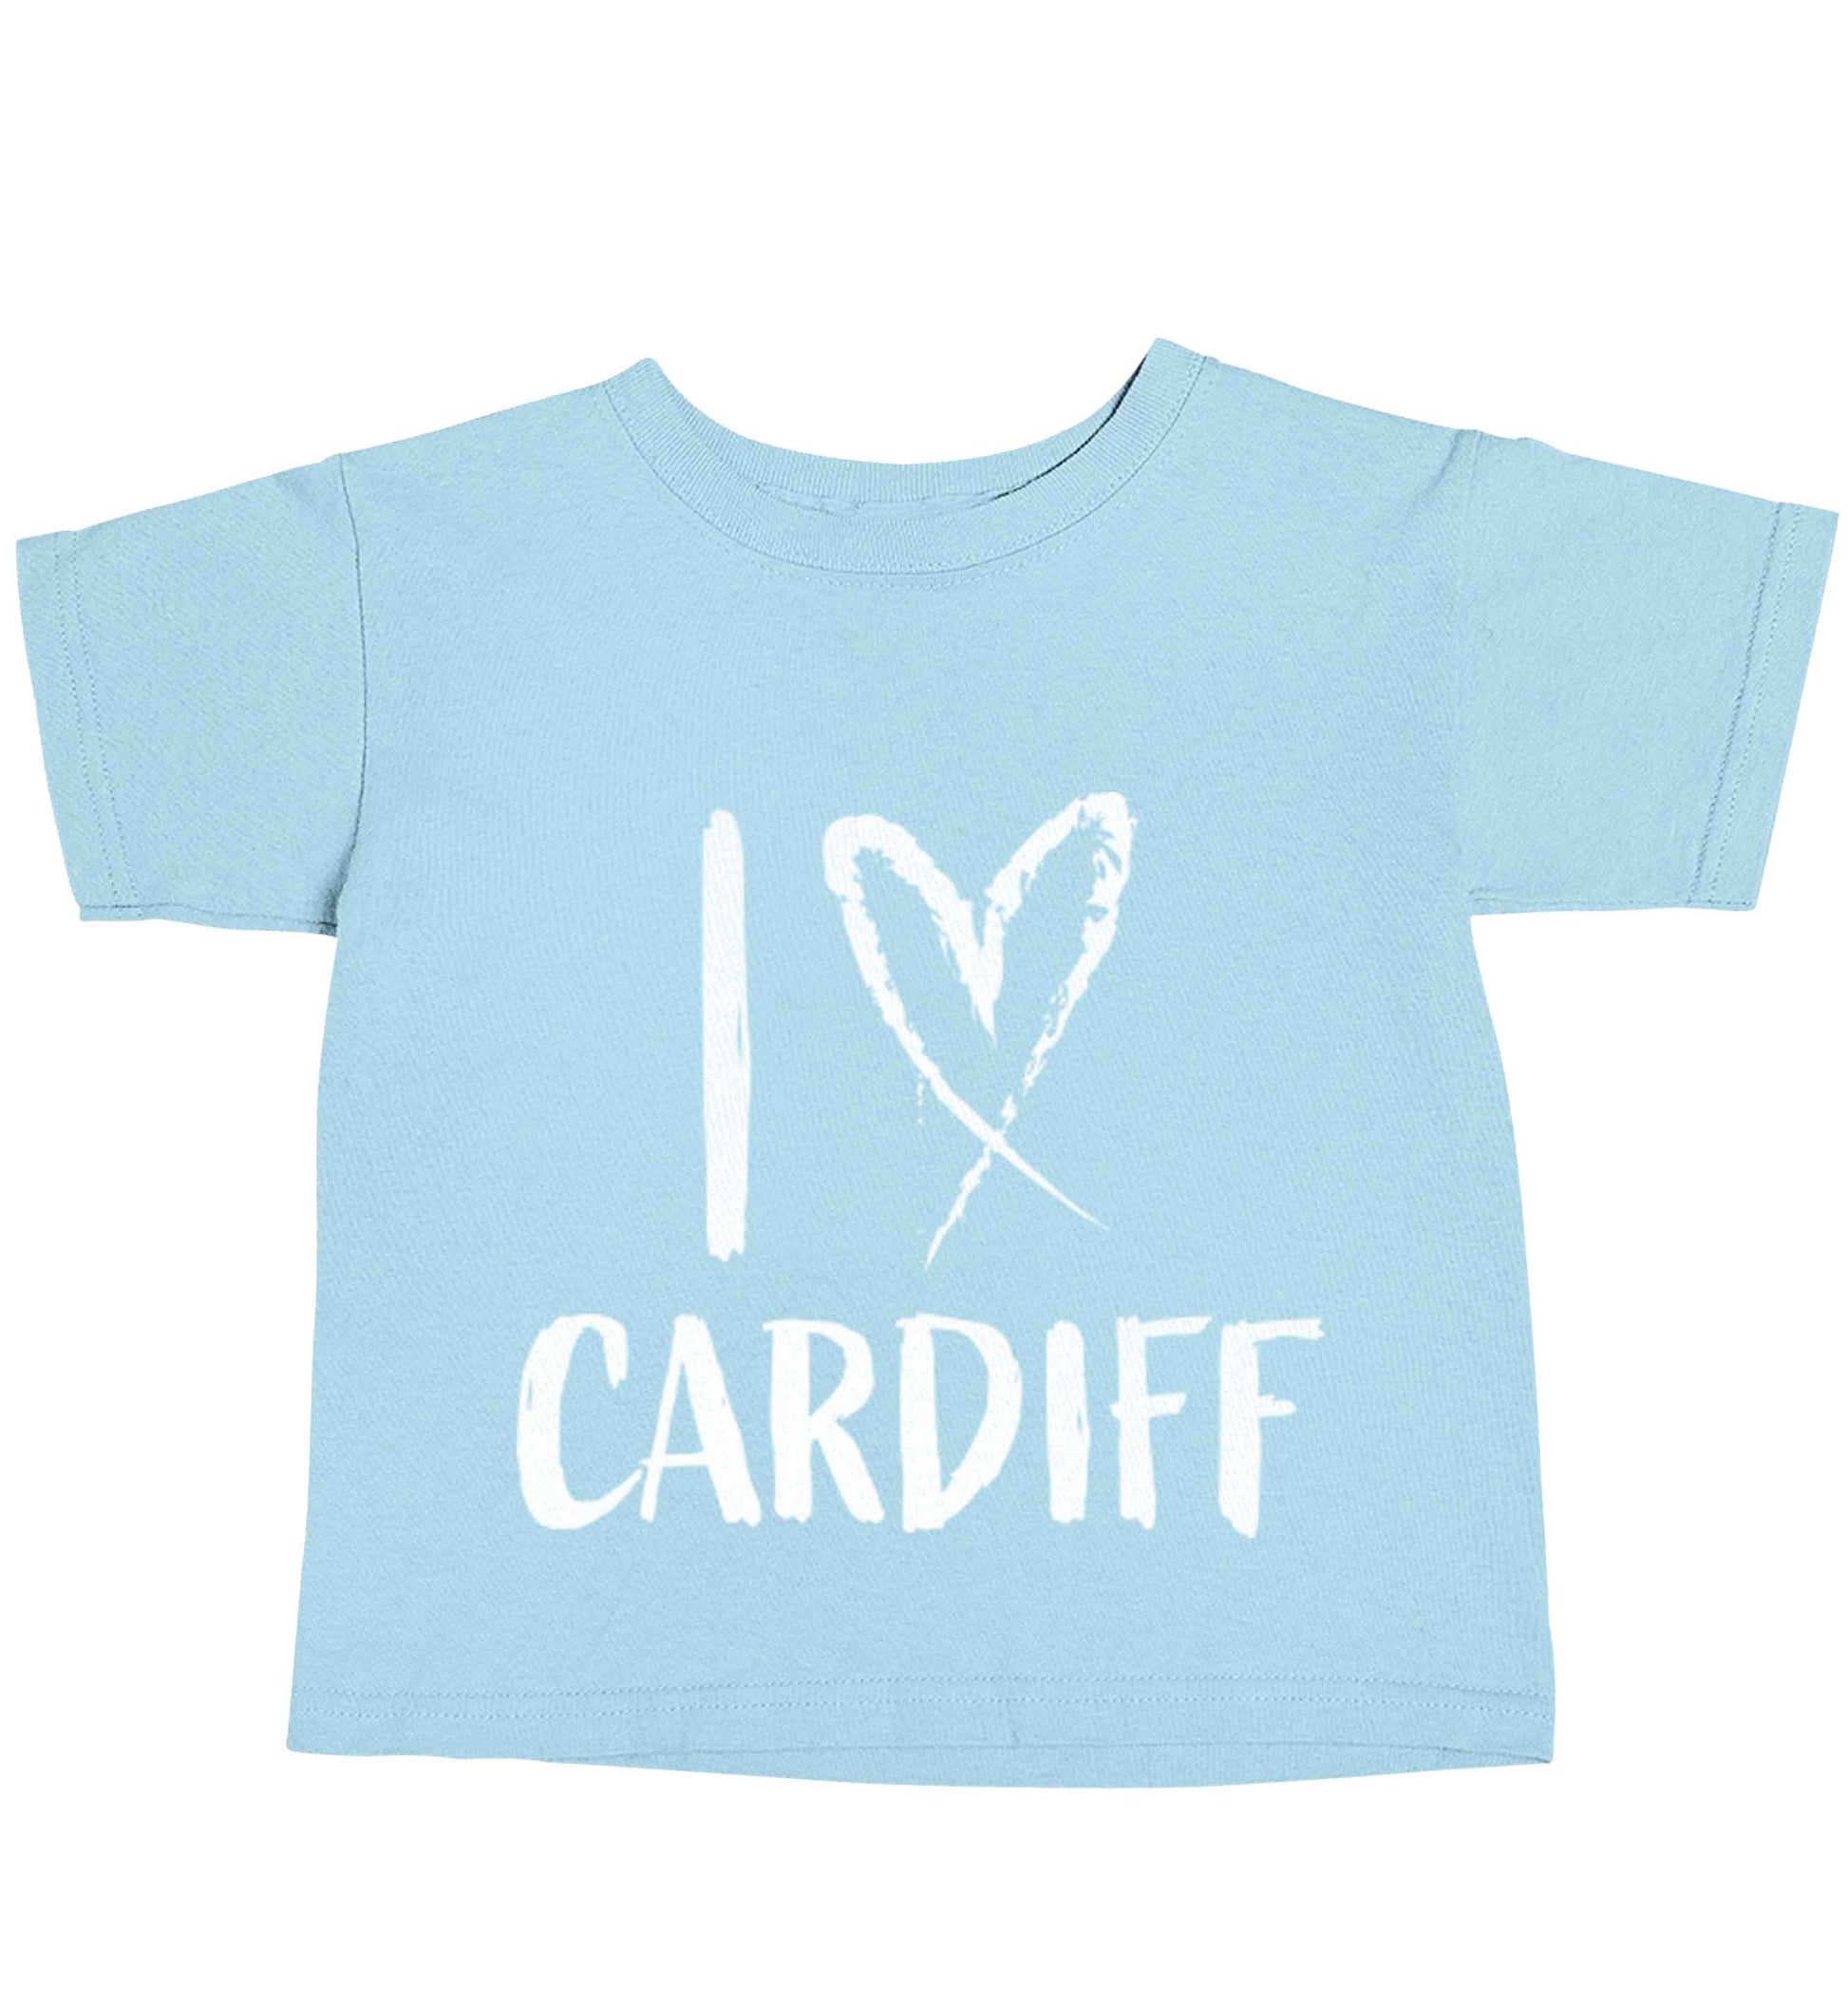 I love Cardiff light blue baby toddler Tshirt 2 Years